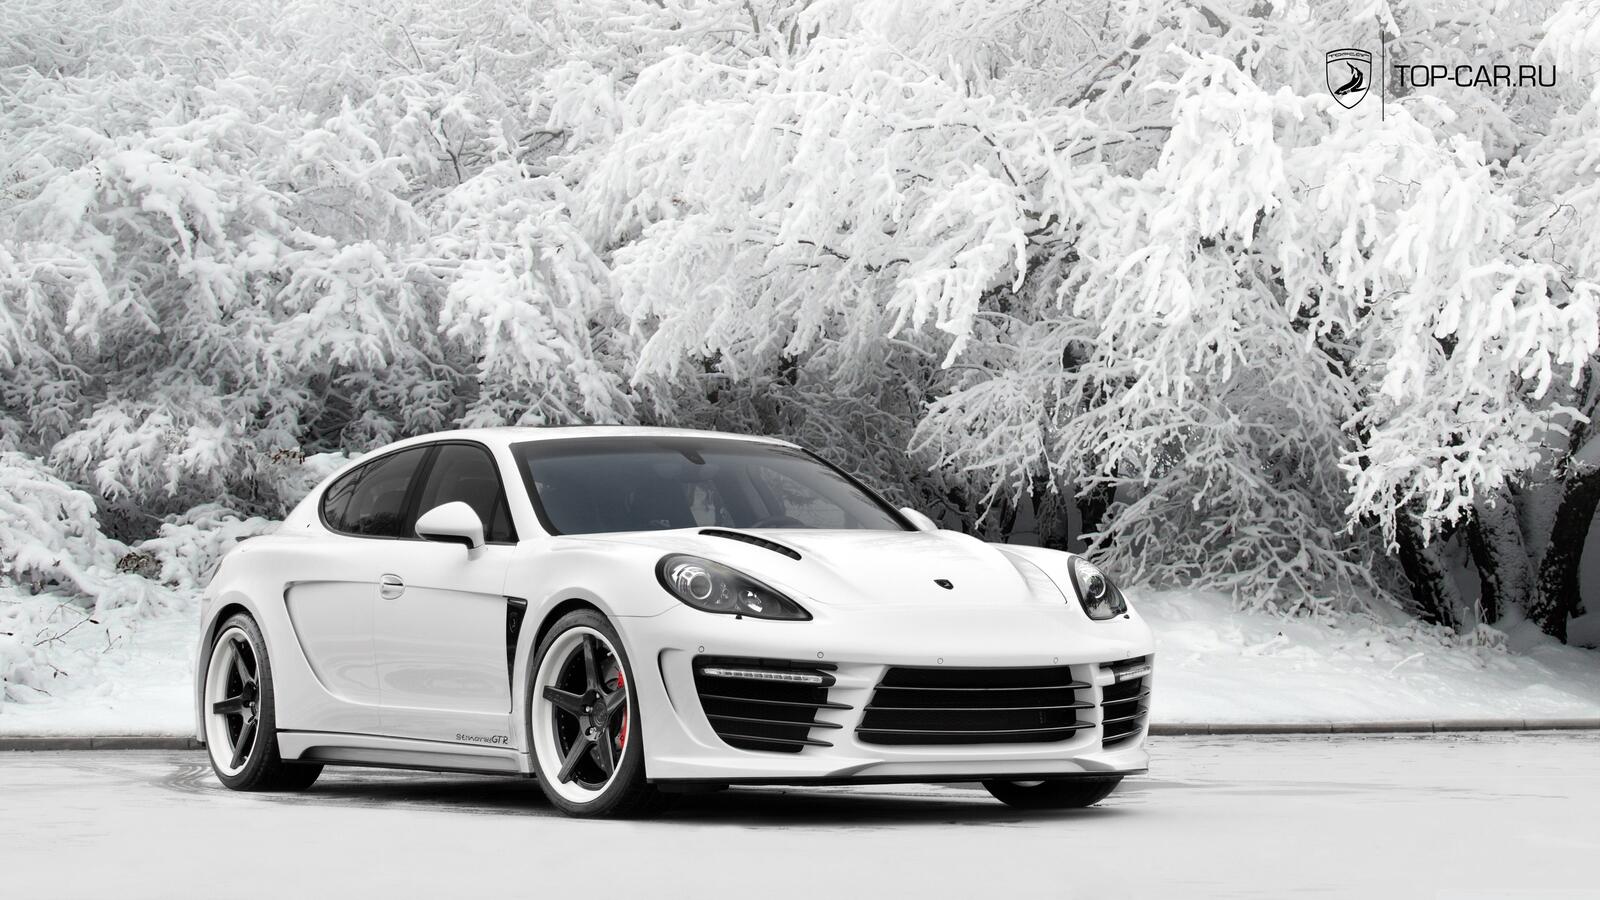 Free photo White Porsche Panamera in unusual tuning on vossen rims